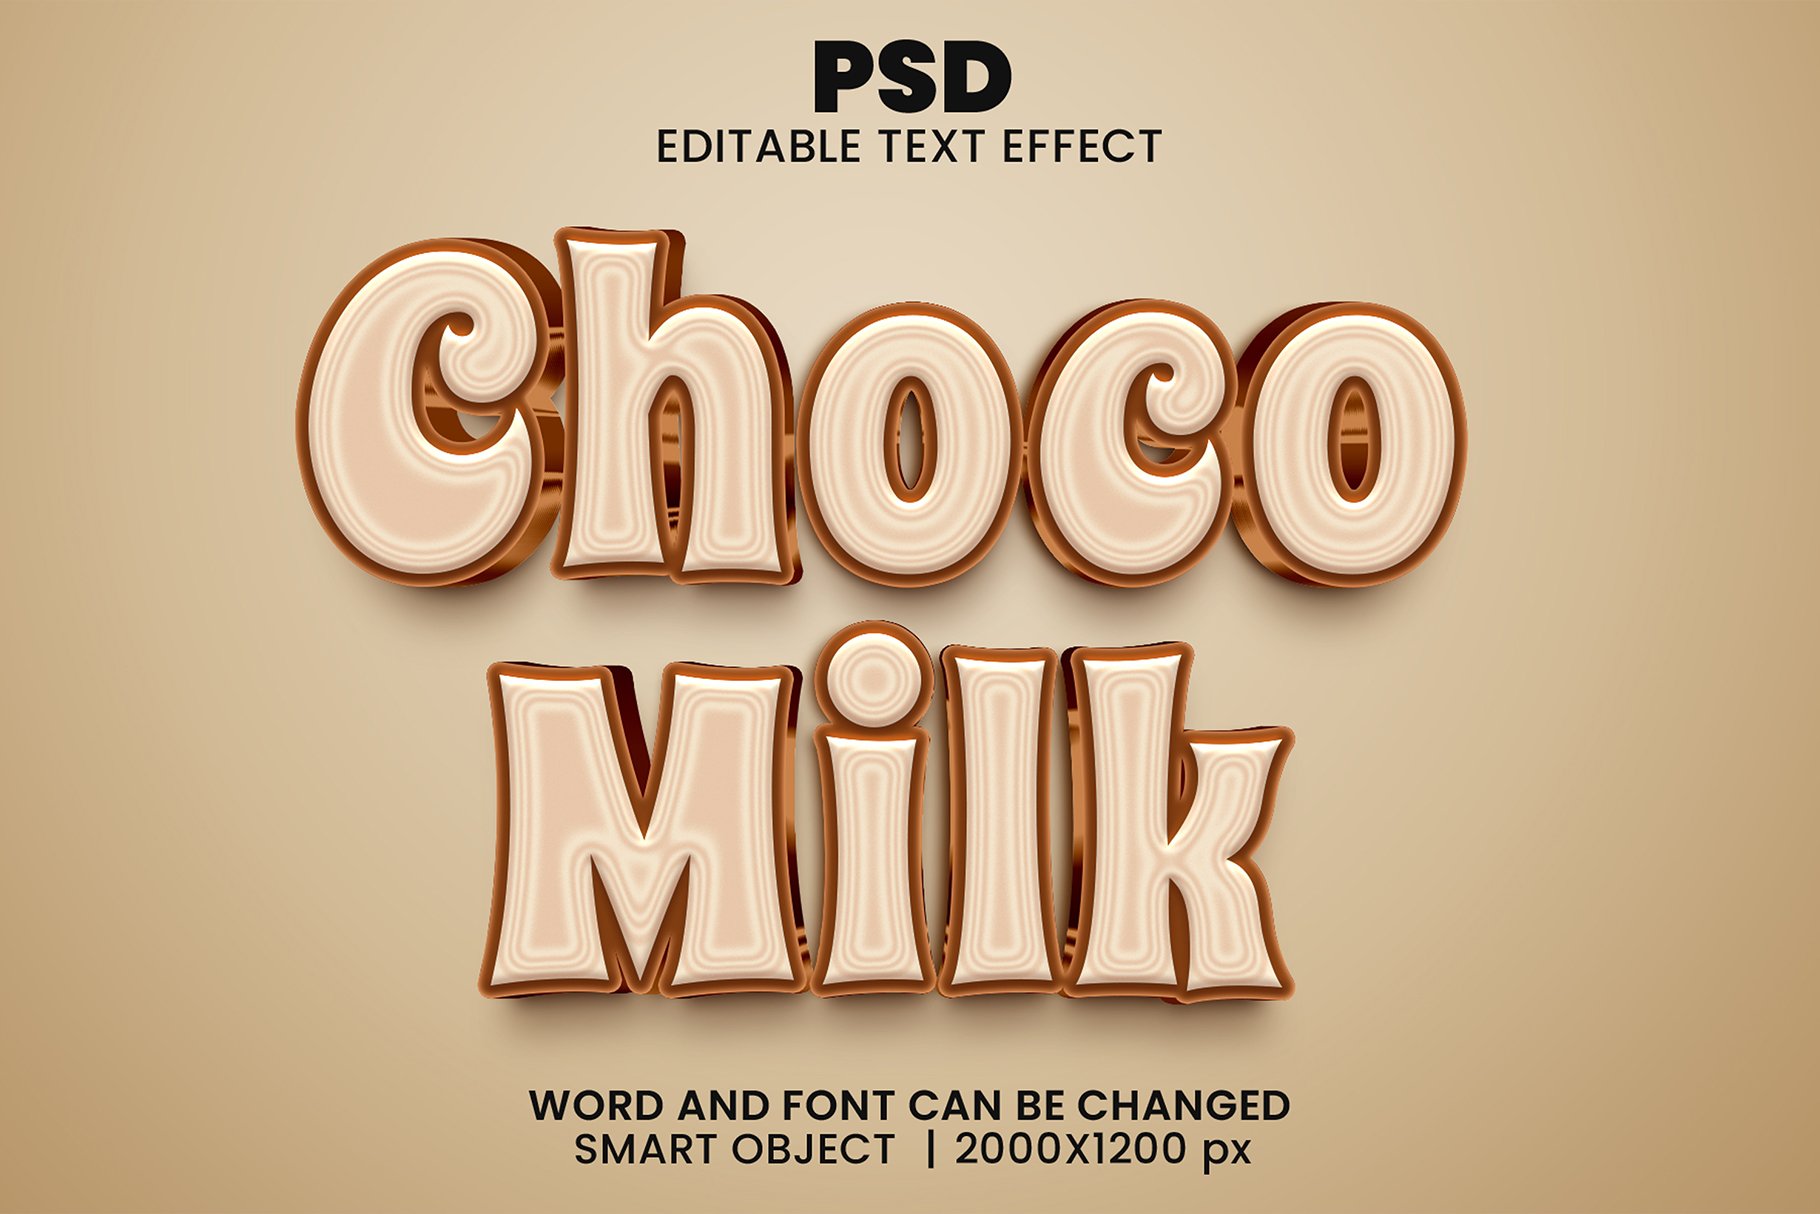 Choco milk 3d Editable Text Effectcover image.